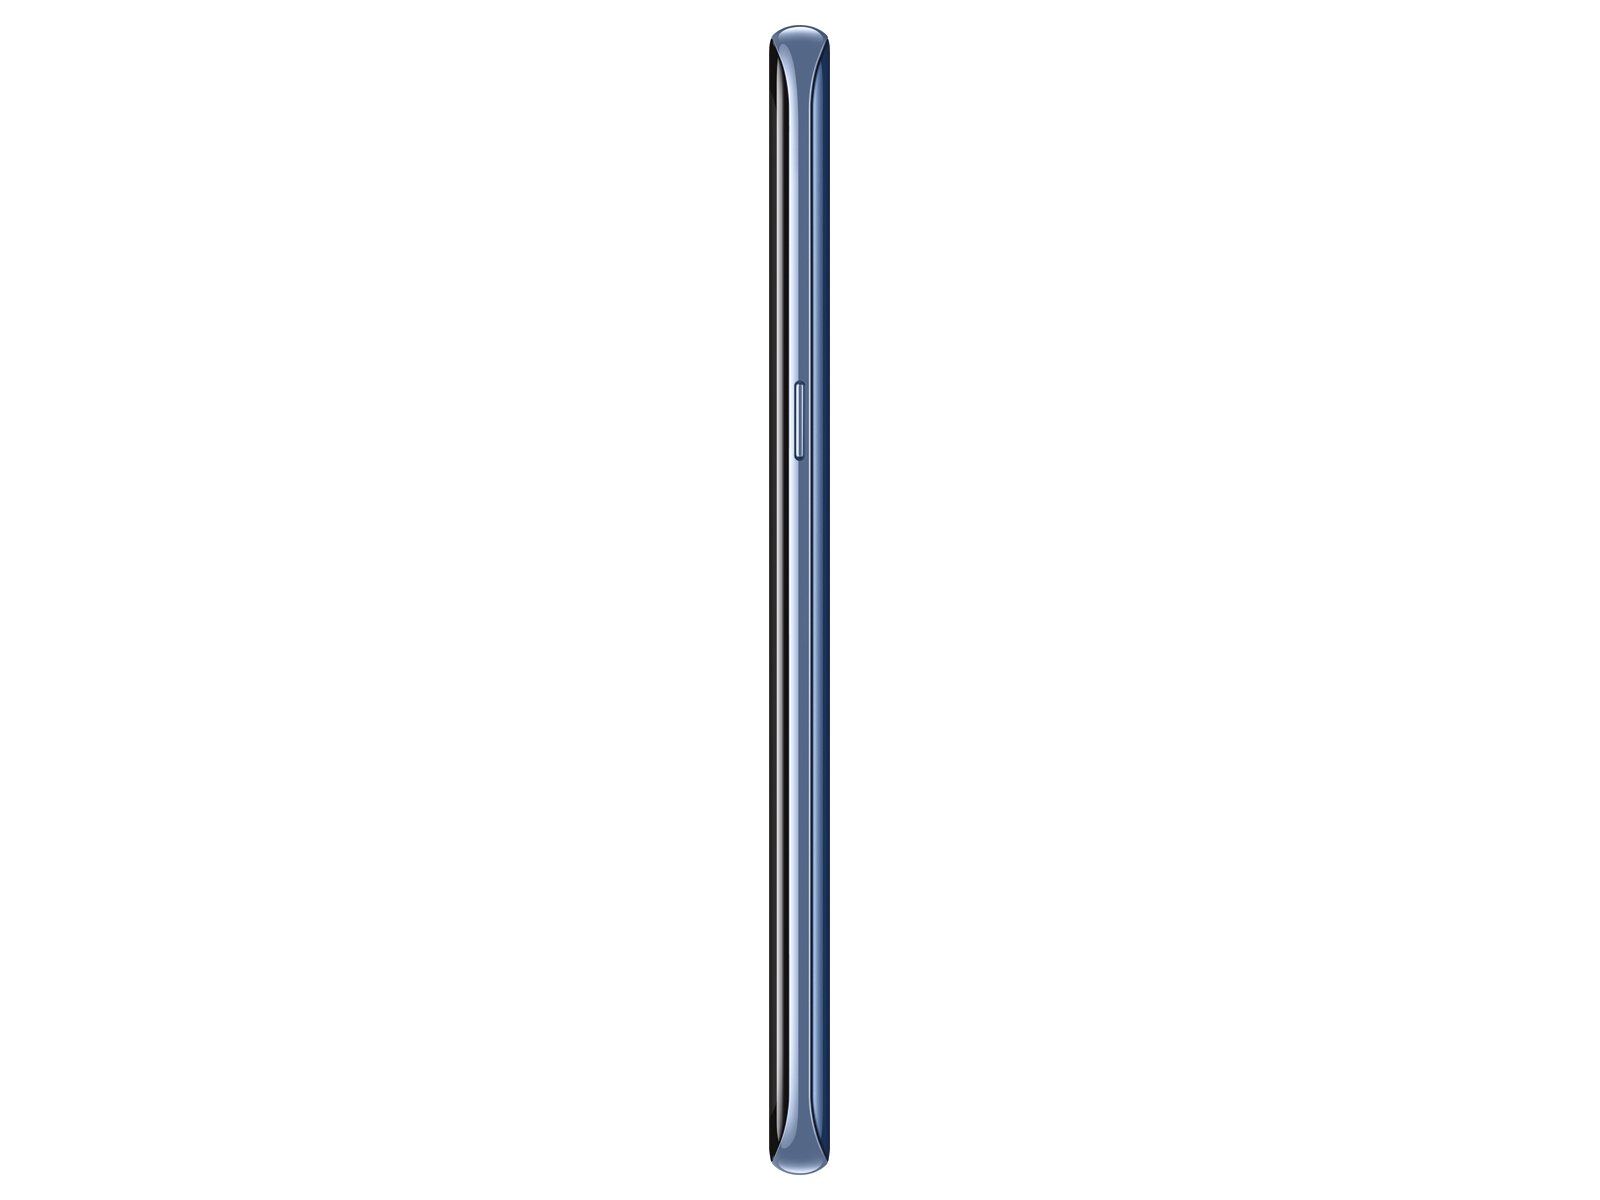 Thumbnail image of Galaxy S8 64GB (Unlocked)